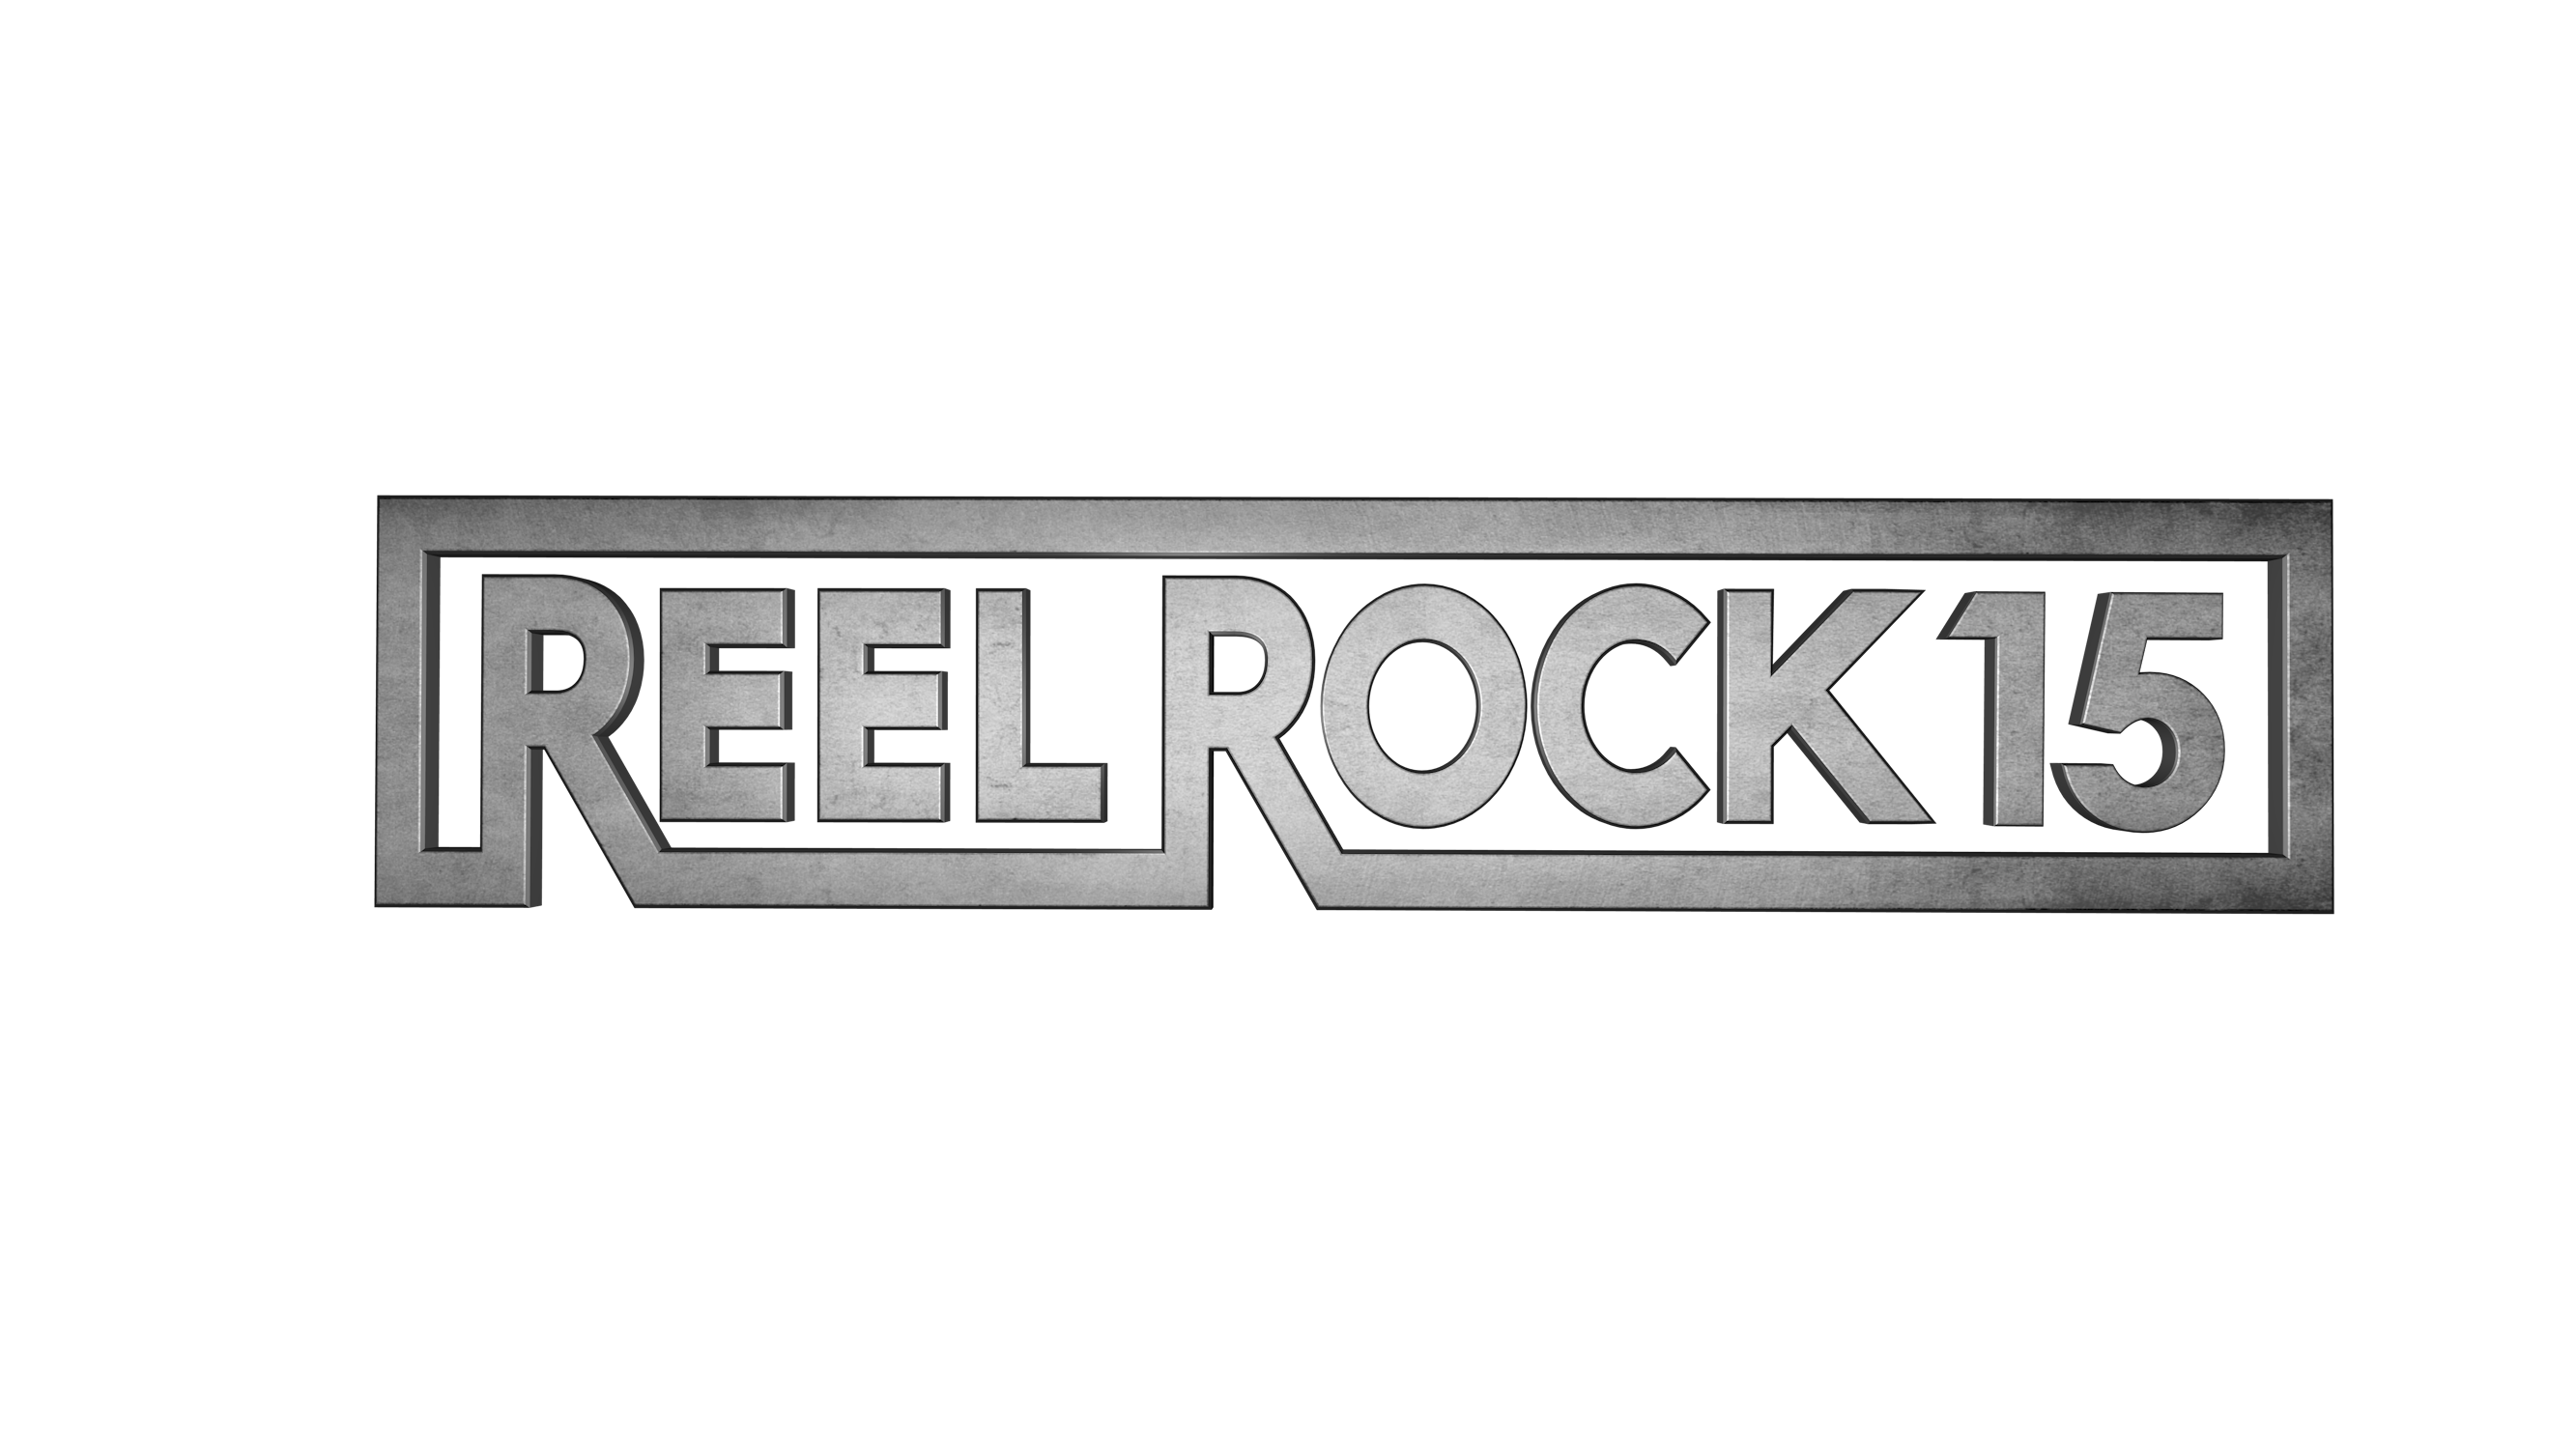 REEL ROCK 15, REEL ROCK 15 - Global Online Premiere